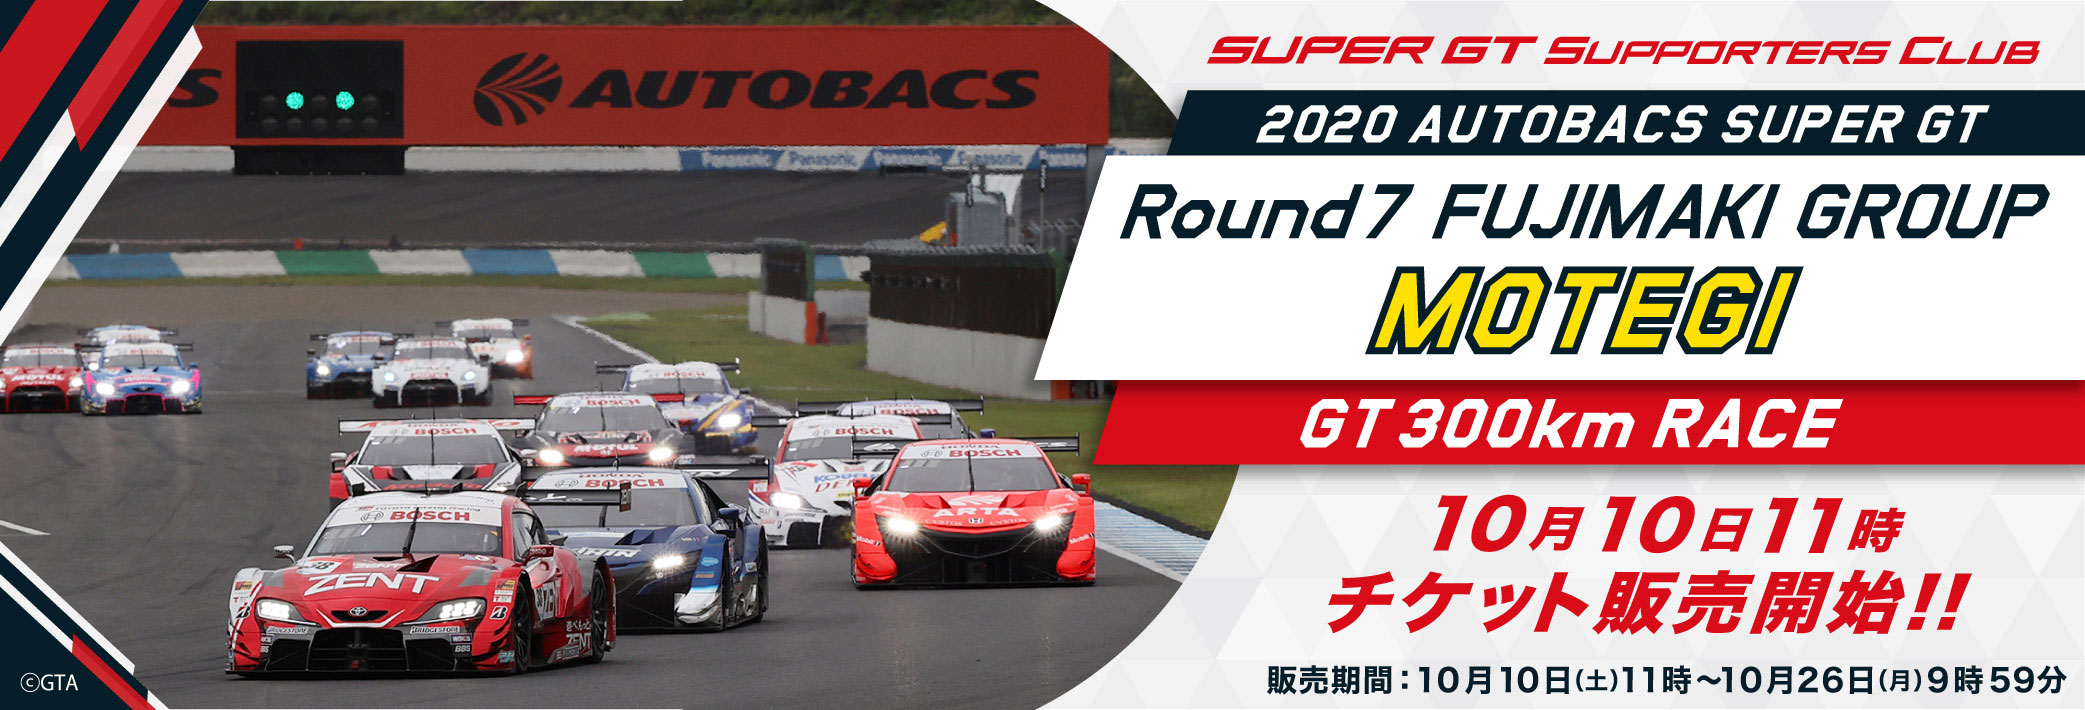 2020 AUTOBACS SUPER GT Round7 FUJIMAKI GROUP MOTEGI GT 300km RACE チケット販売のご案内